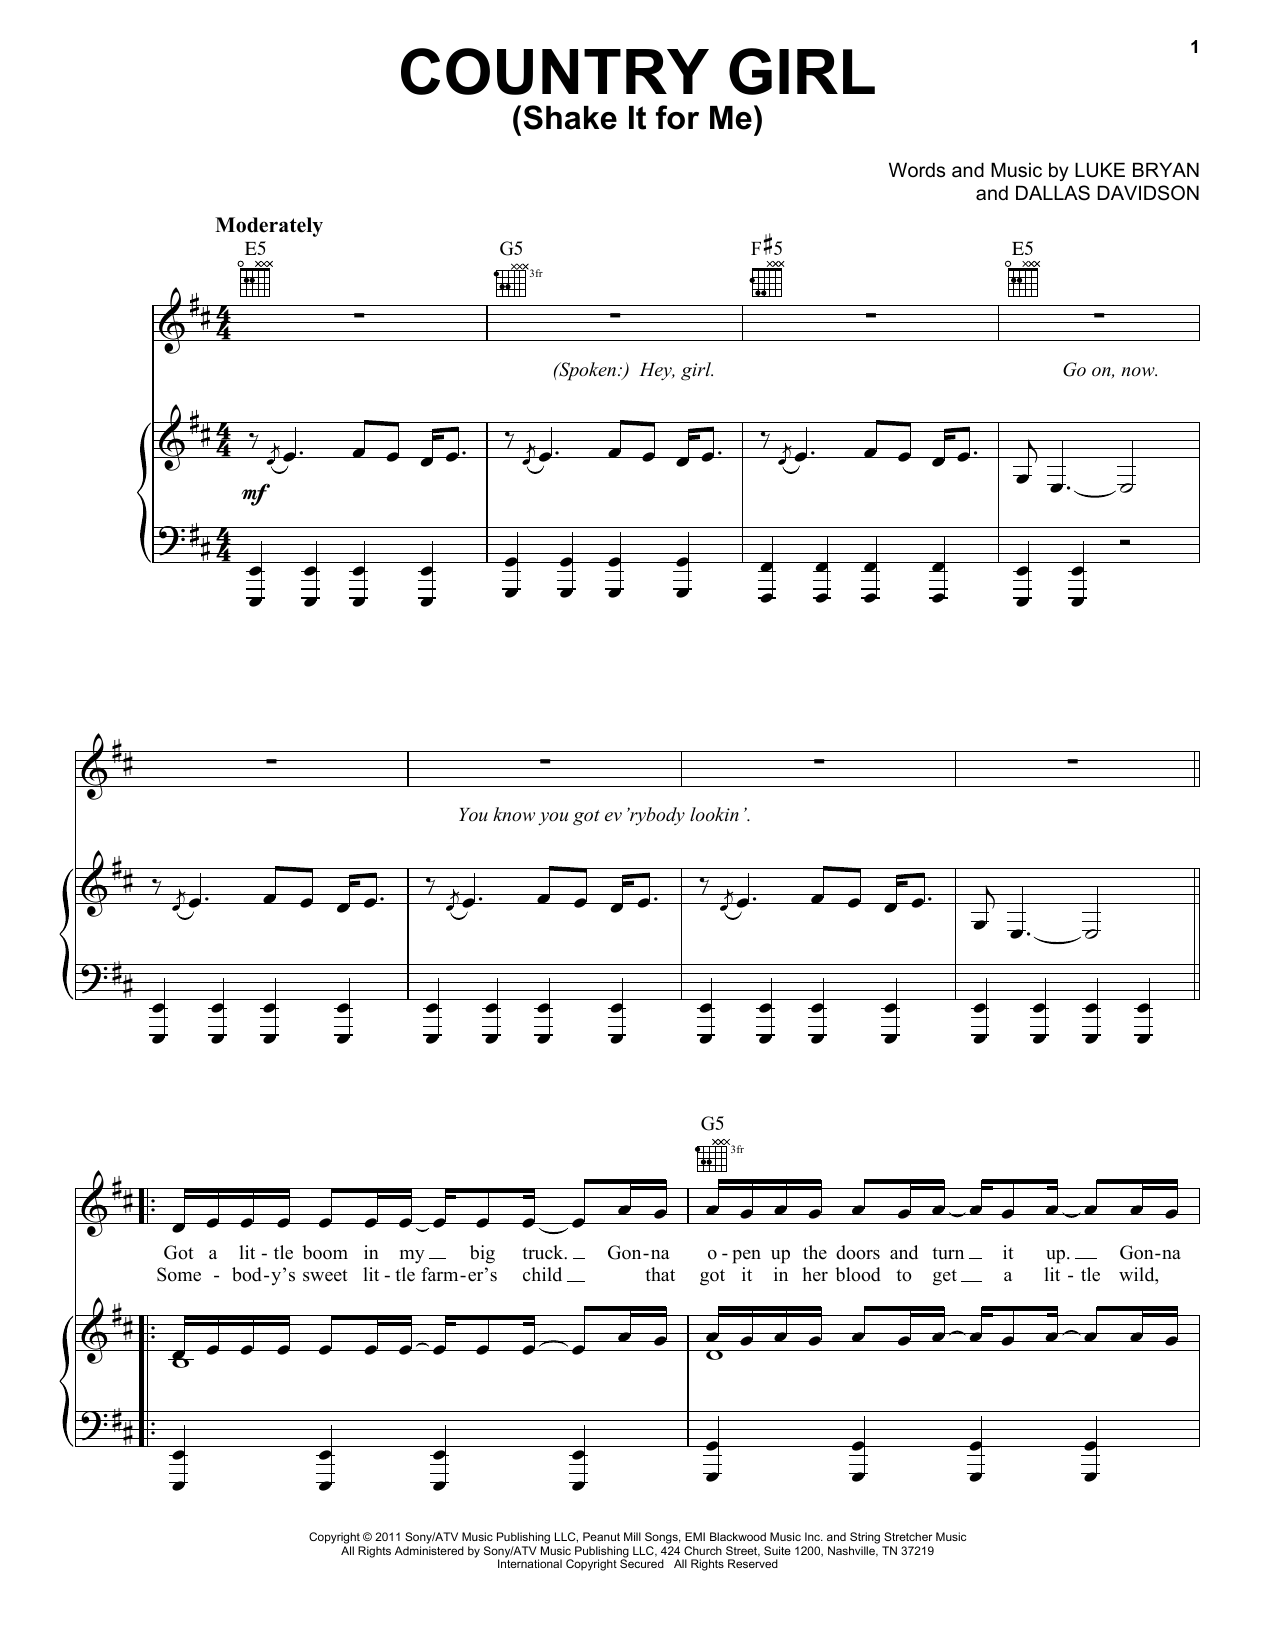 Luke Bryan Country Girl (Shake It For Me) Sheet Music Notes & Chords for Guitar Tab Play-Along - Download or Print PDF